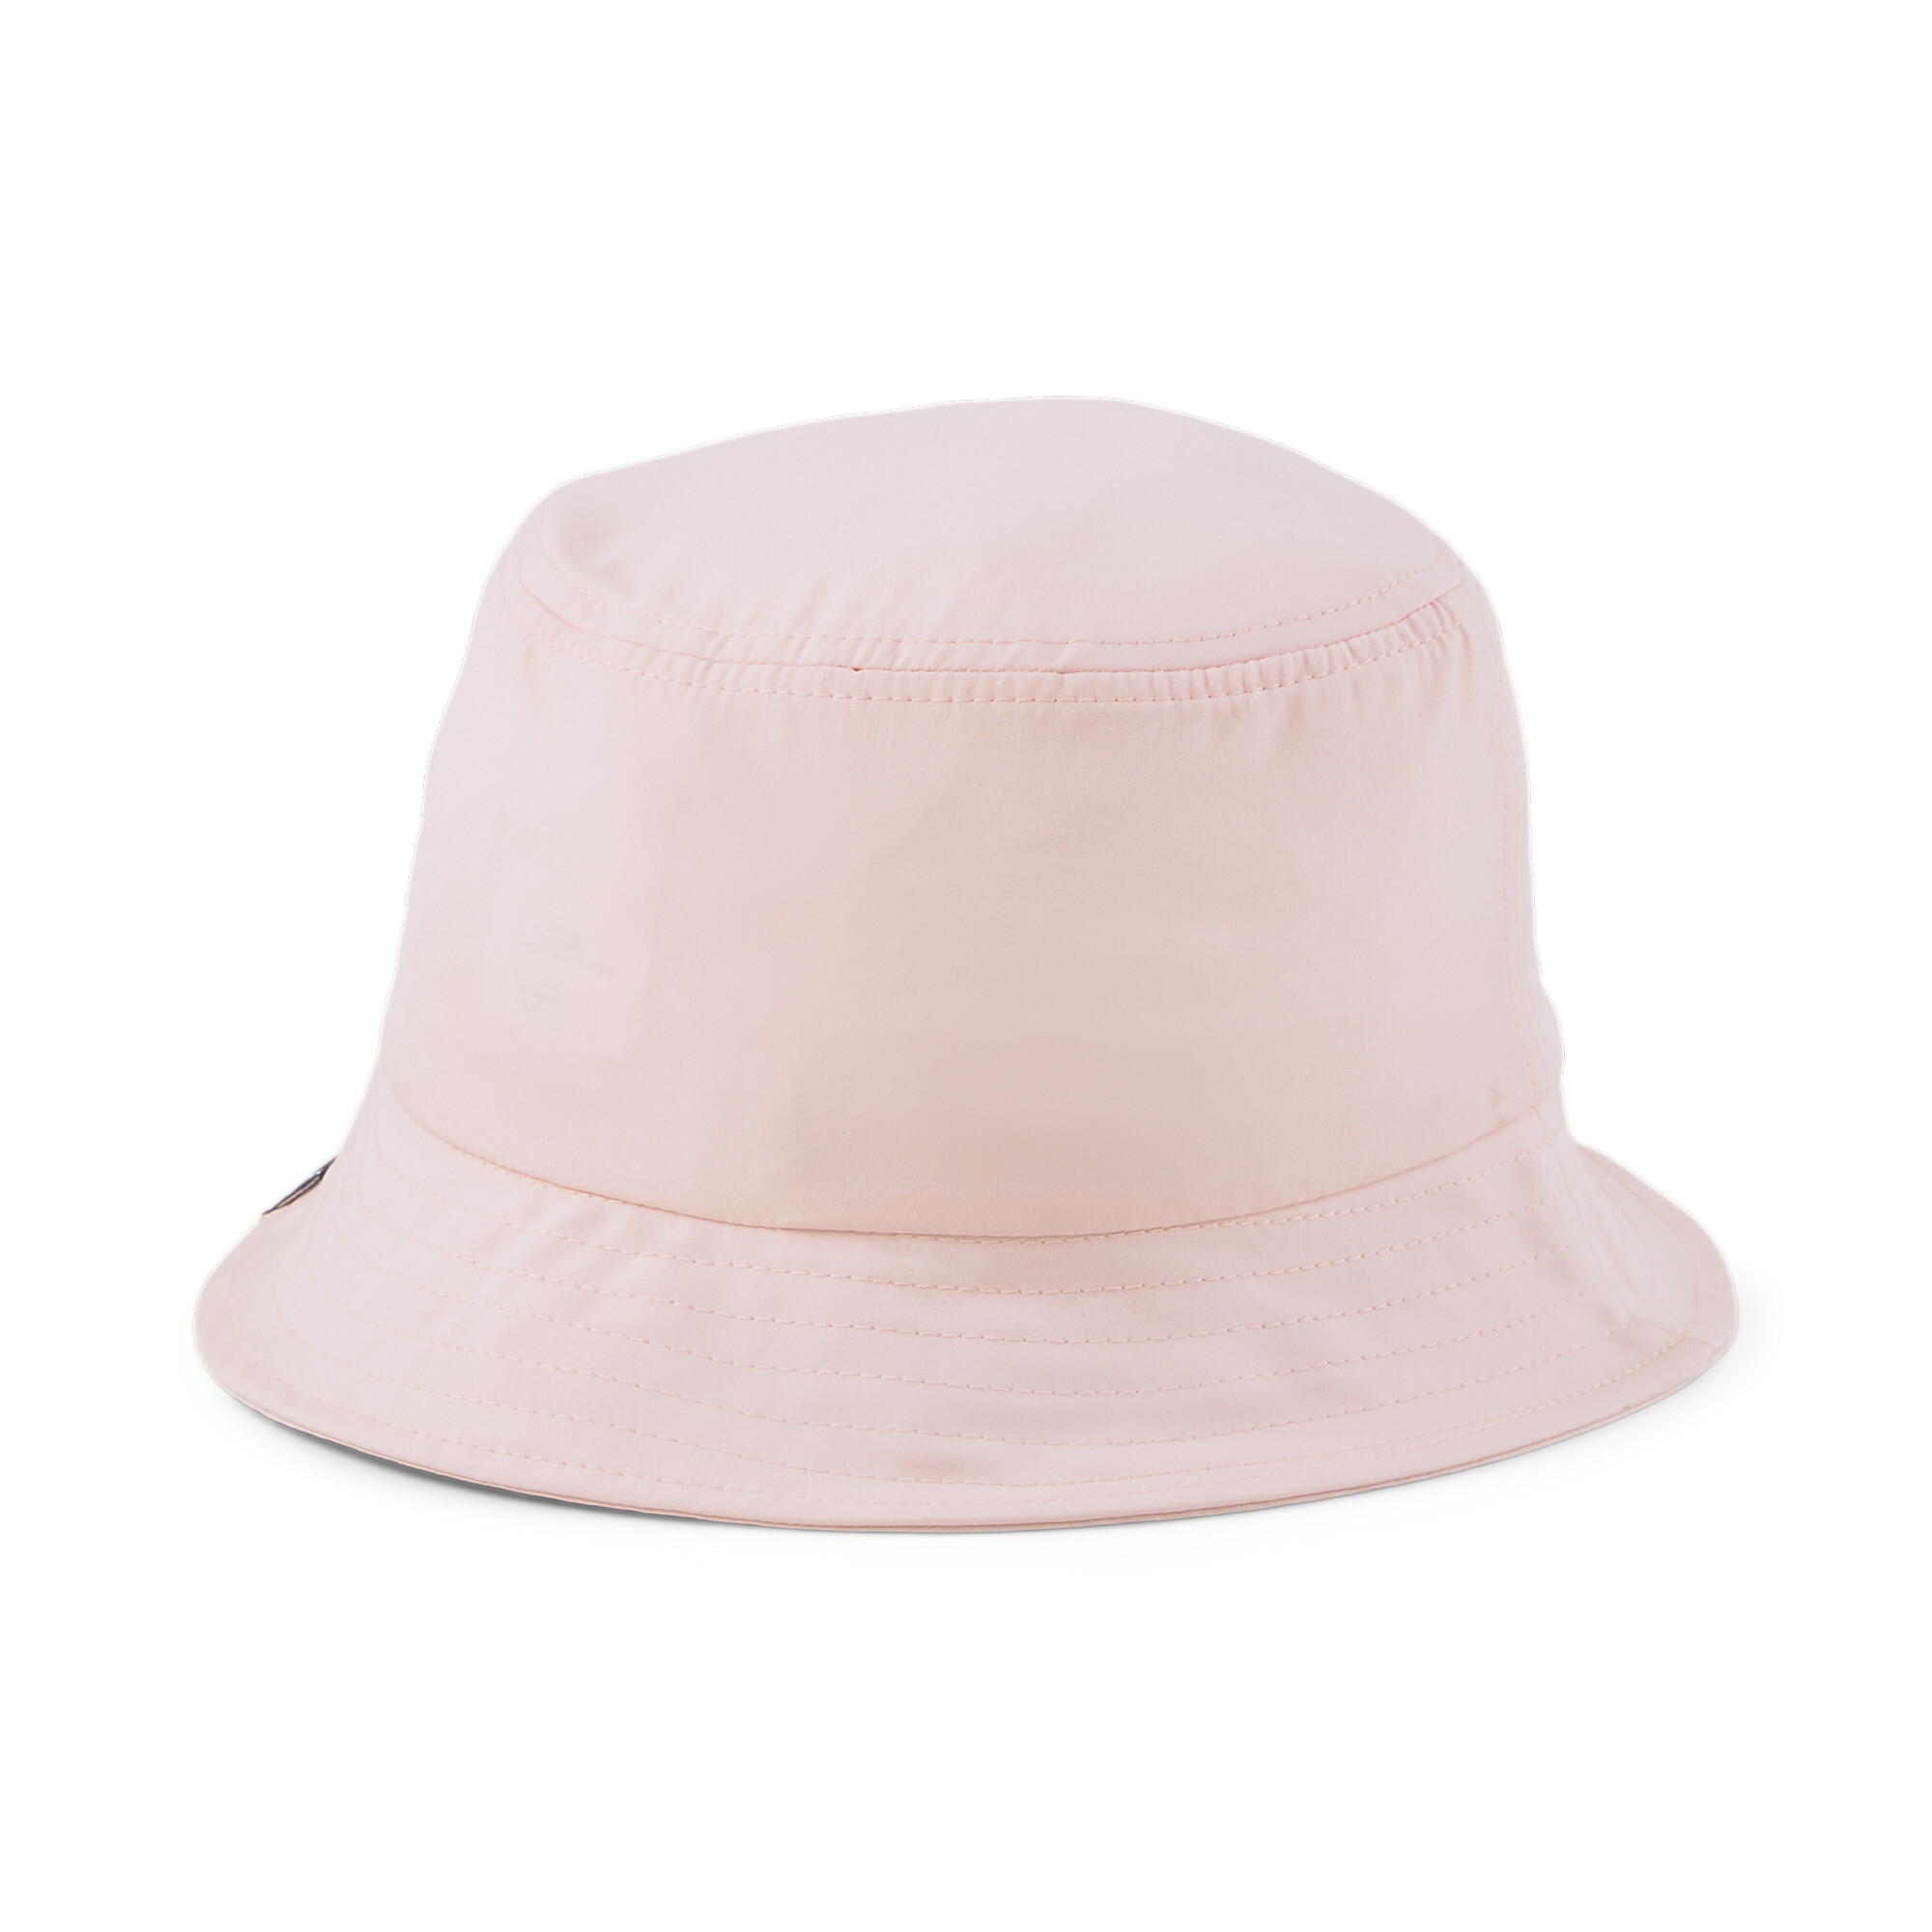 قبعة دلو PUMA X SPONGEBOB وردي